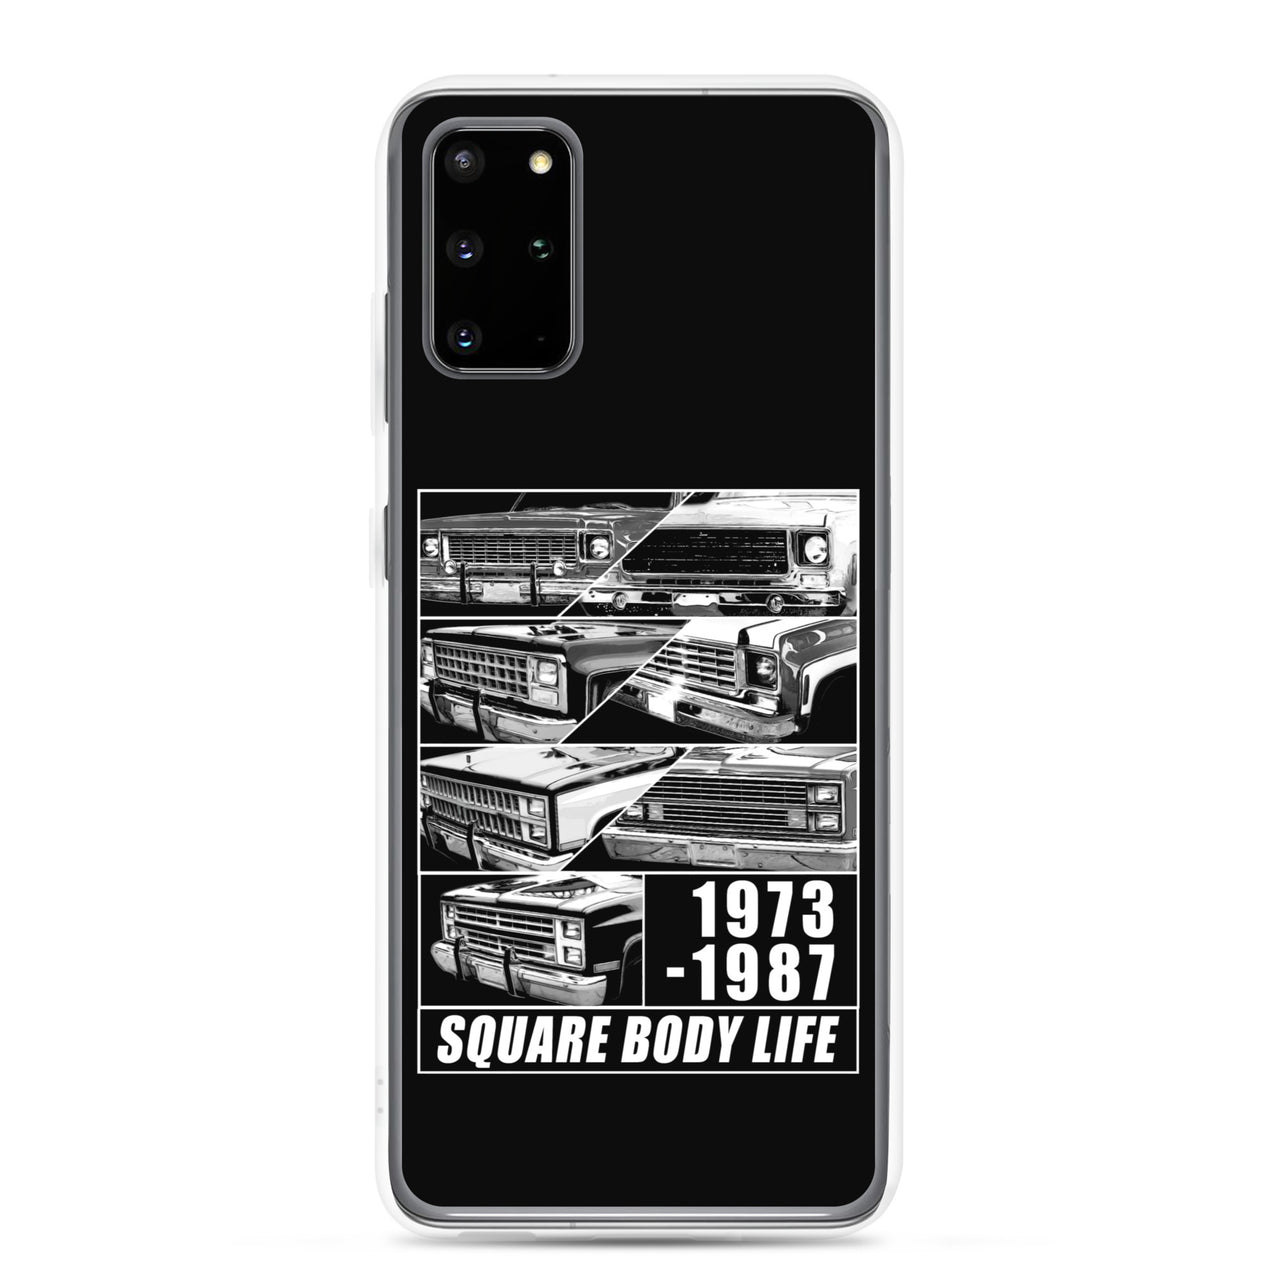 Squarebody Truck Samsung Phone Case For S20 Plus